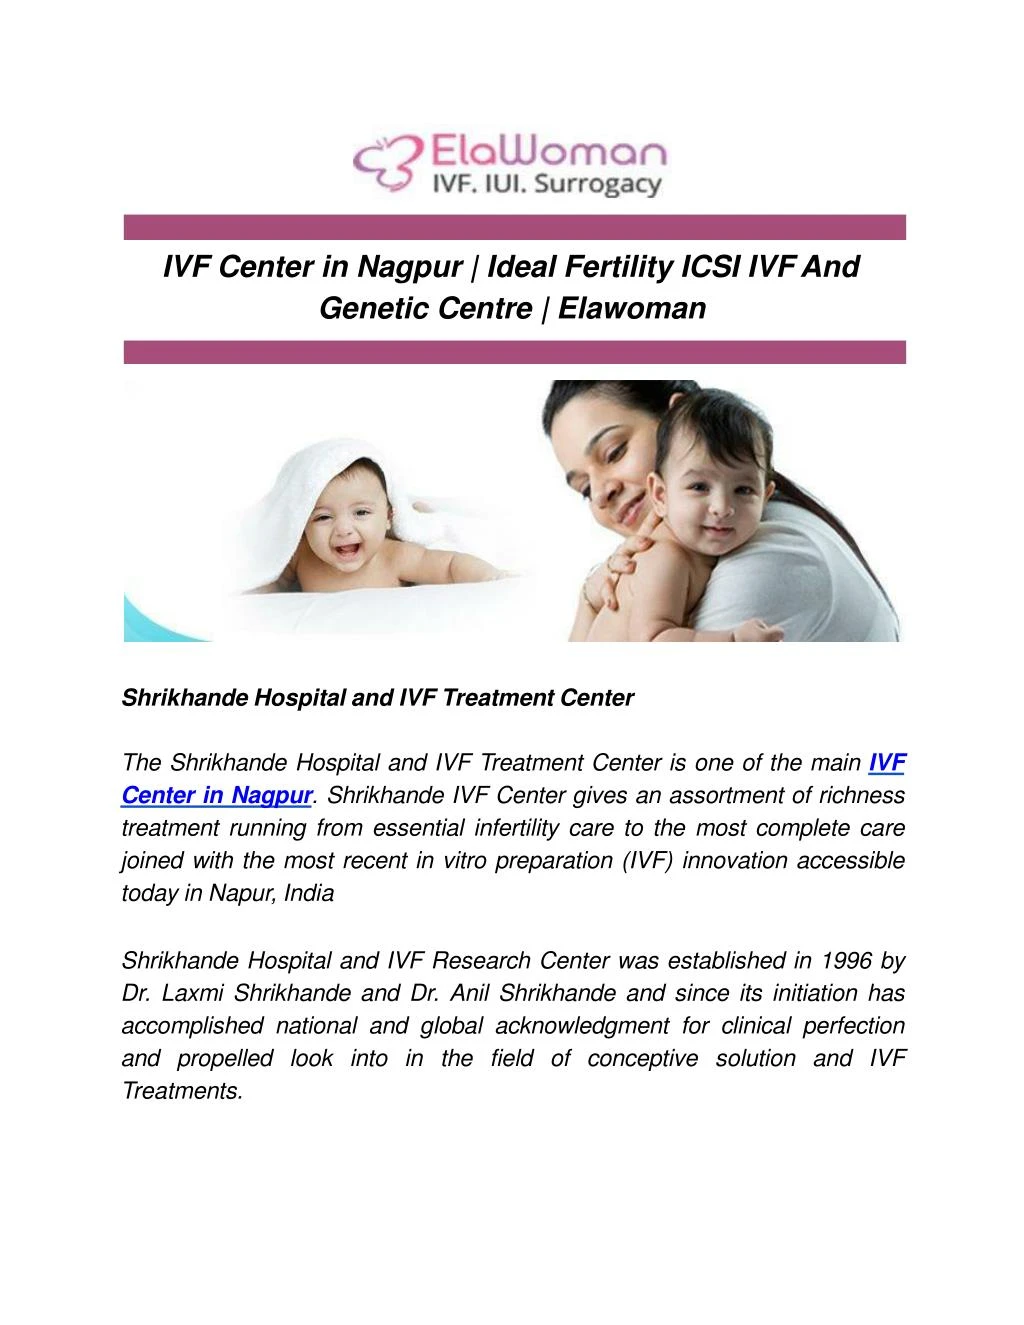 ivf center in nagpur ideal fertility icsi